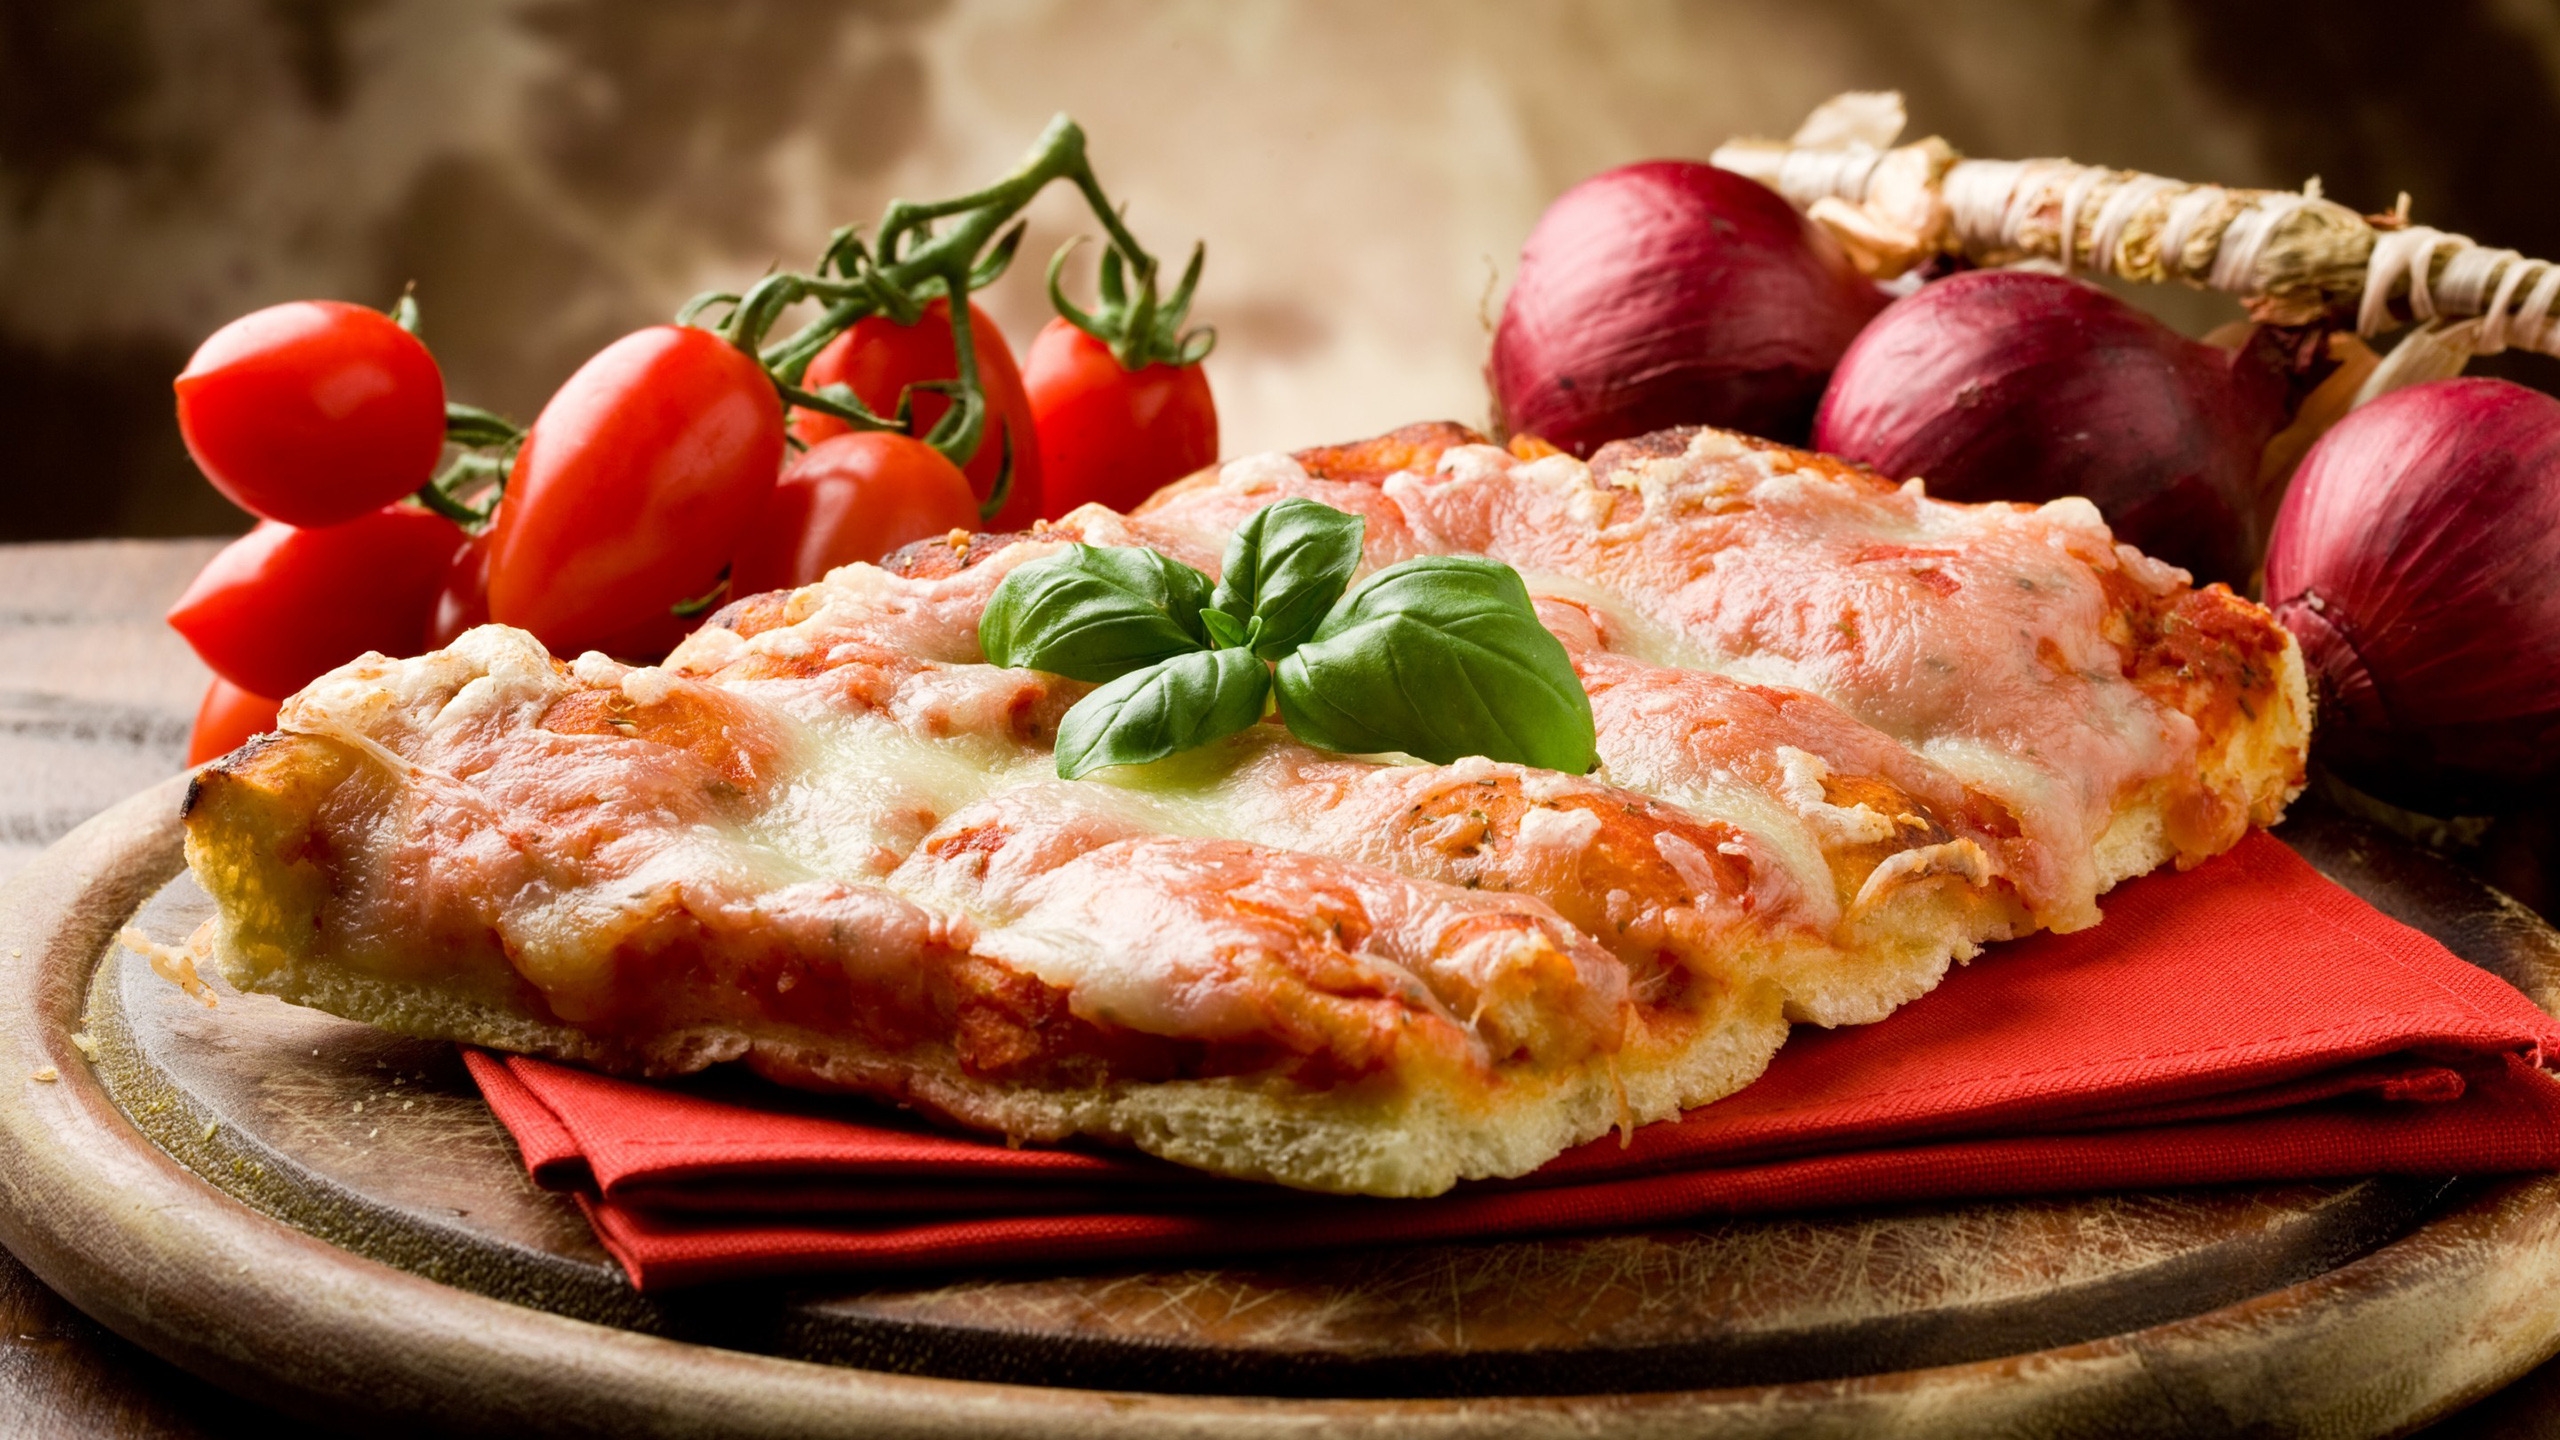 Italian Pizza Slice for 2560x1440 HDTV resolution